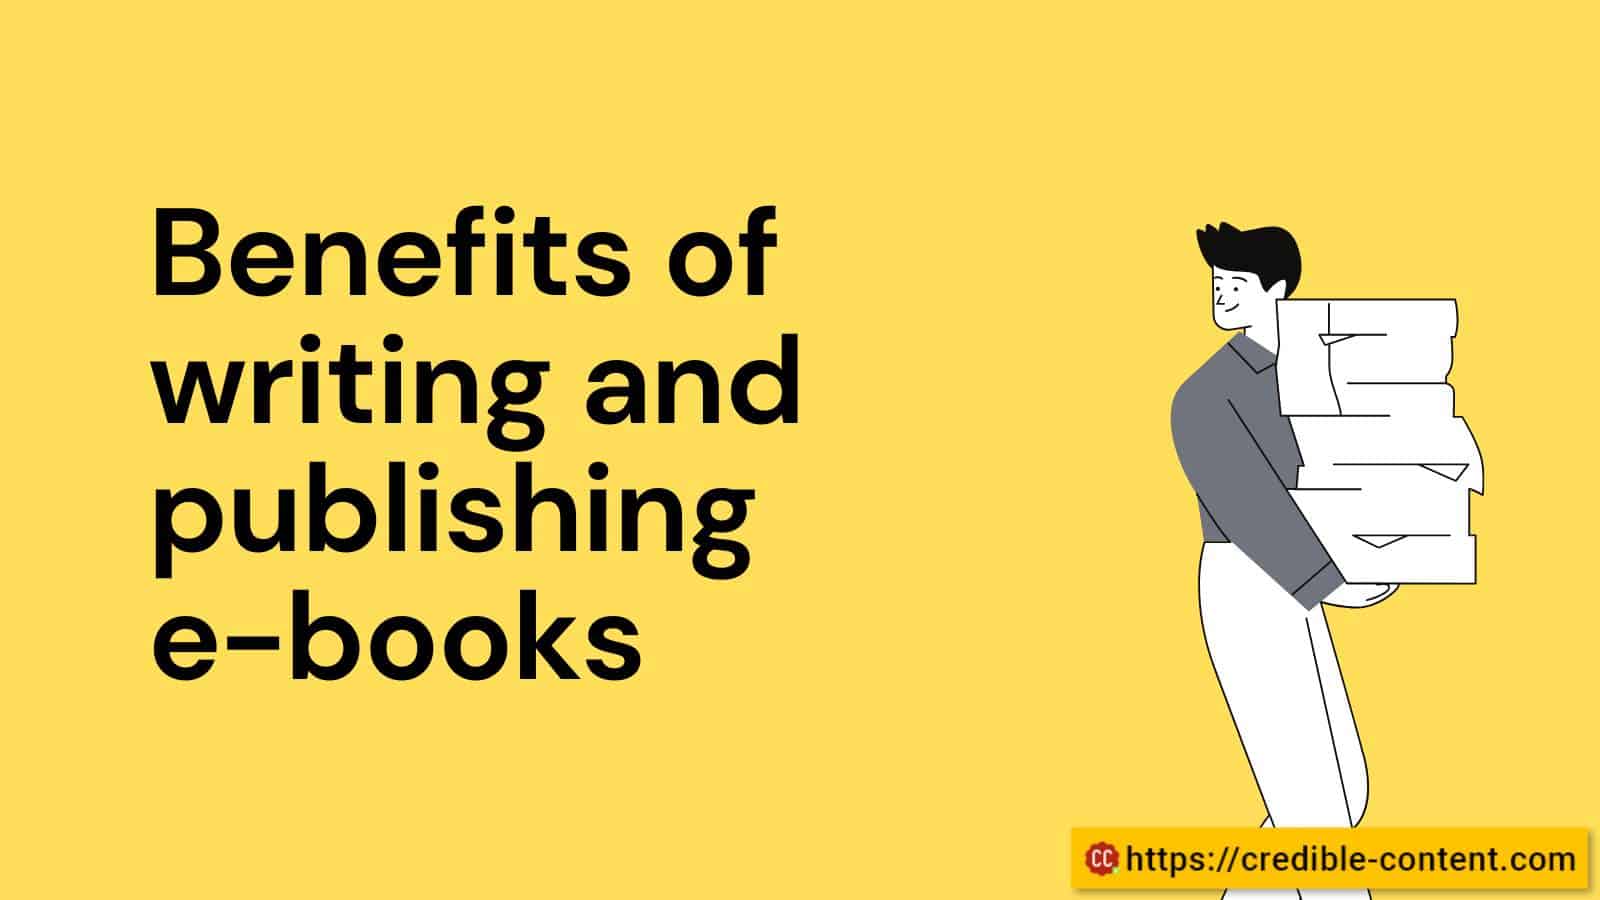 Benefits of writing and publishing e-books